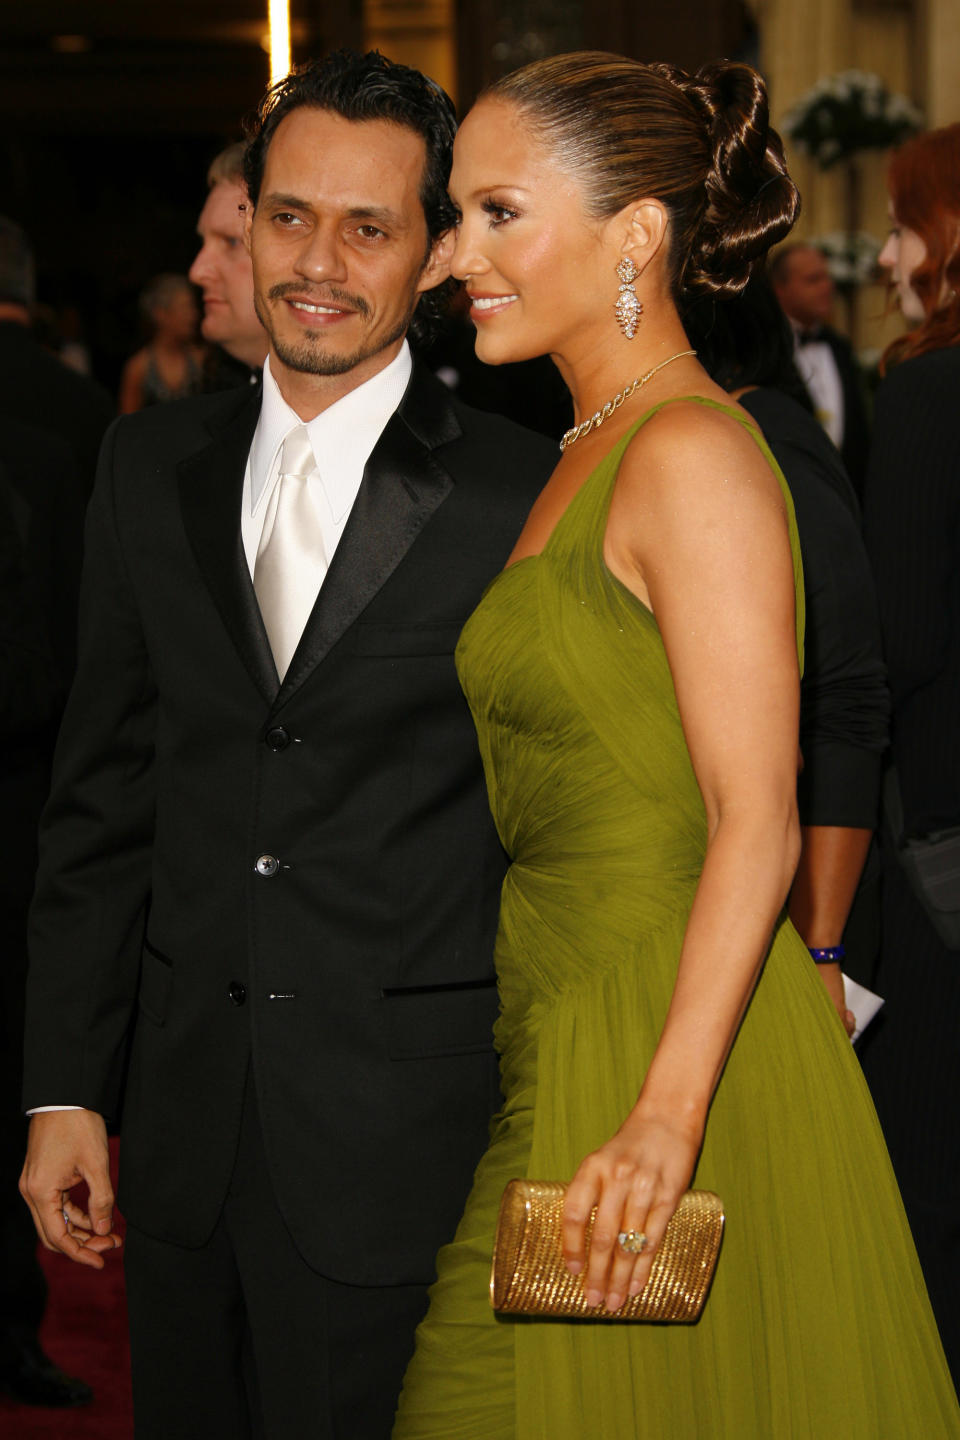 Jennifer Lopez’s marriage to Marc Anthony